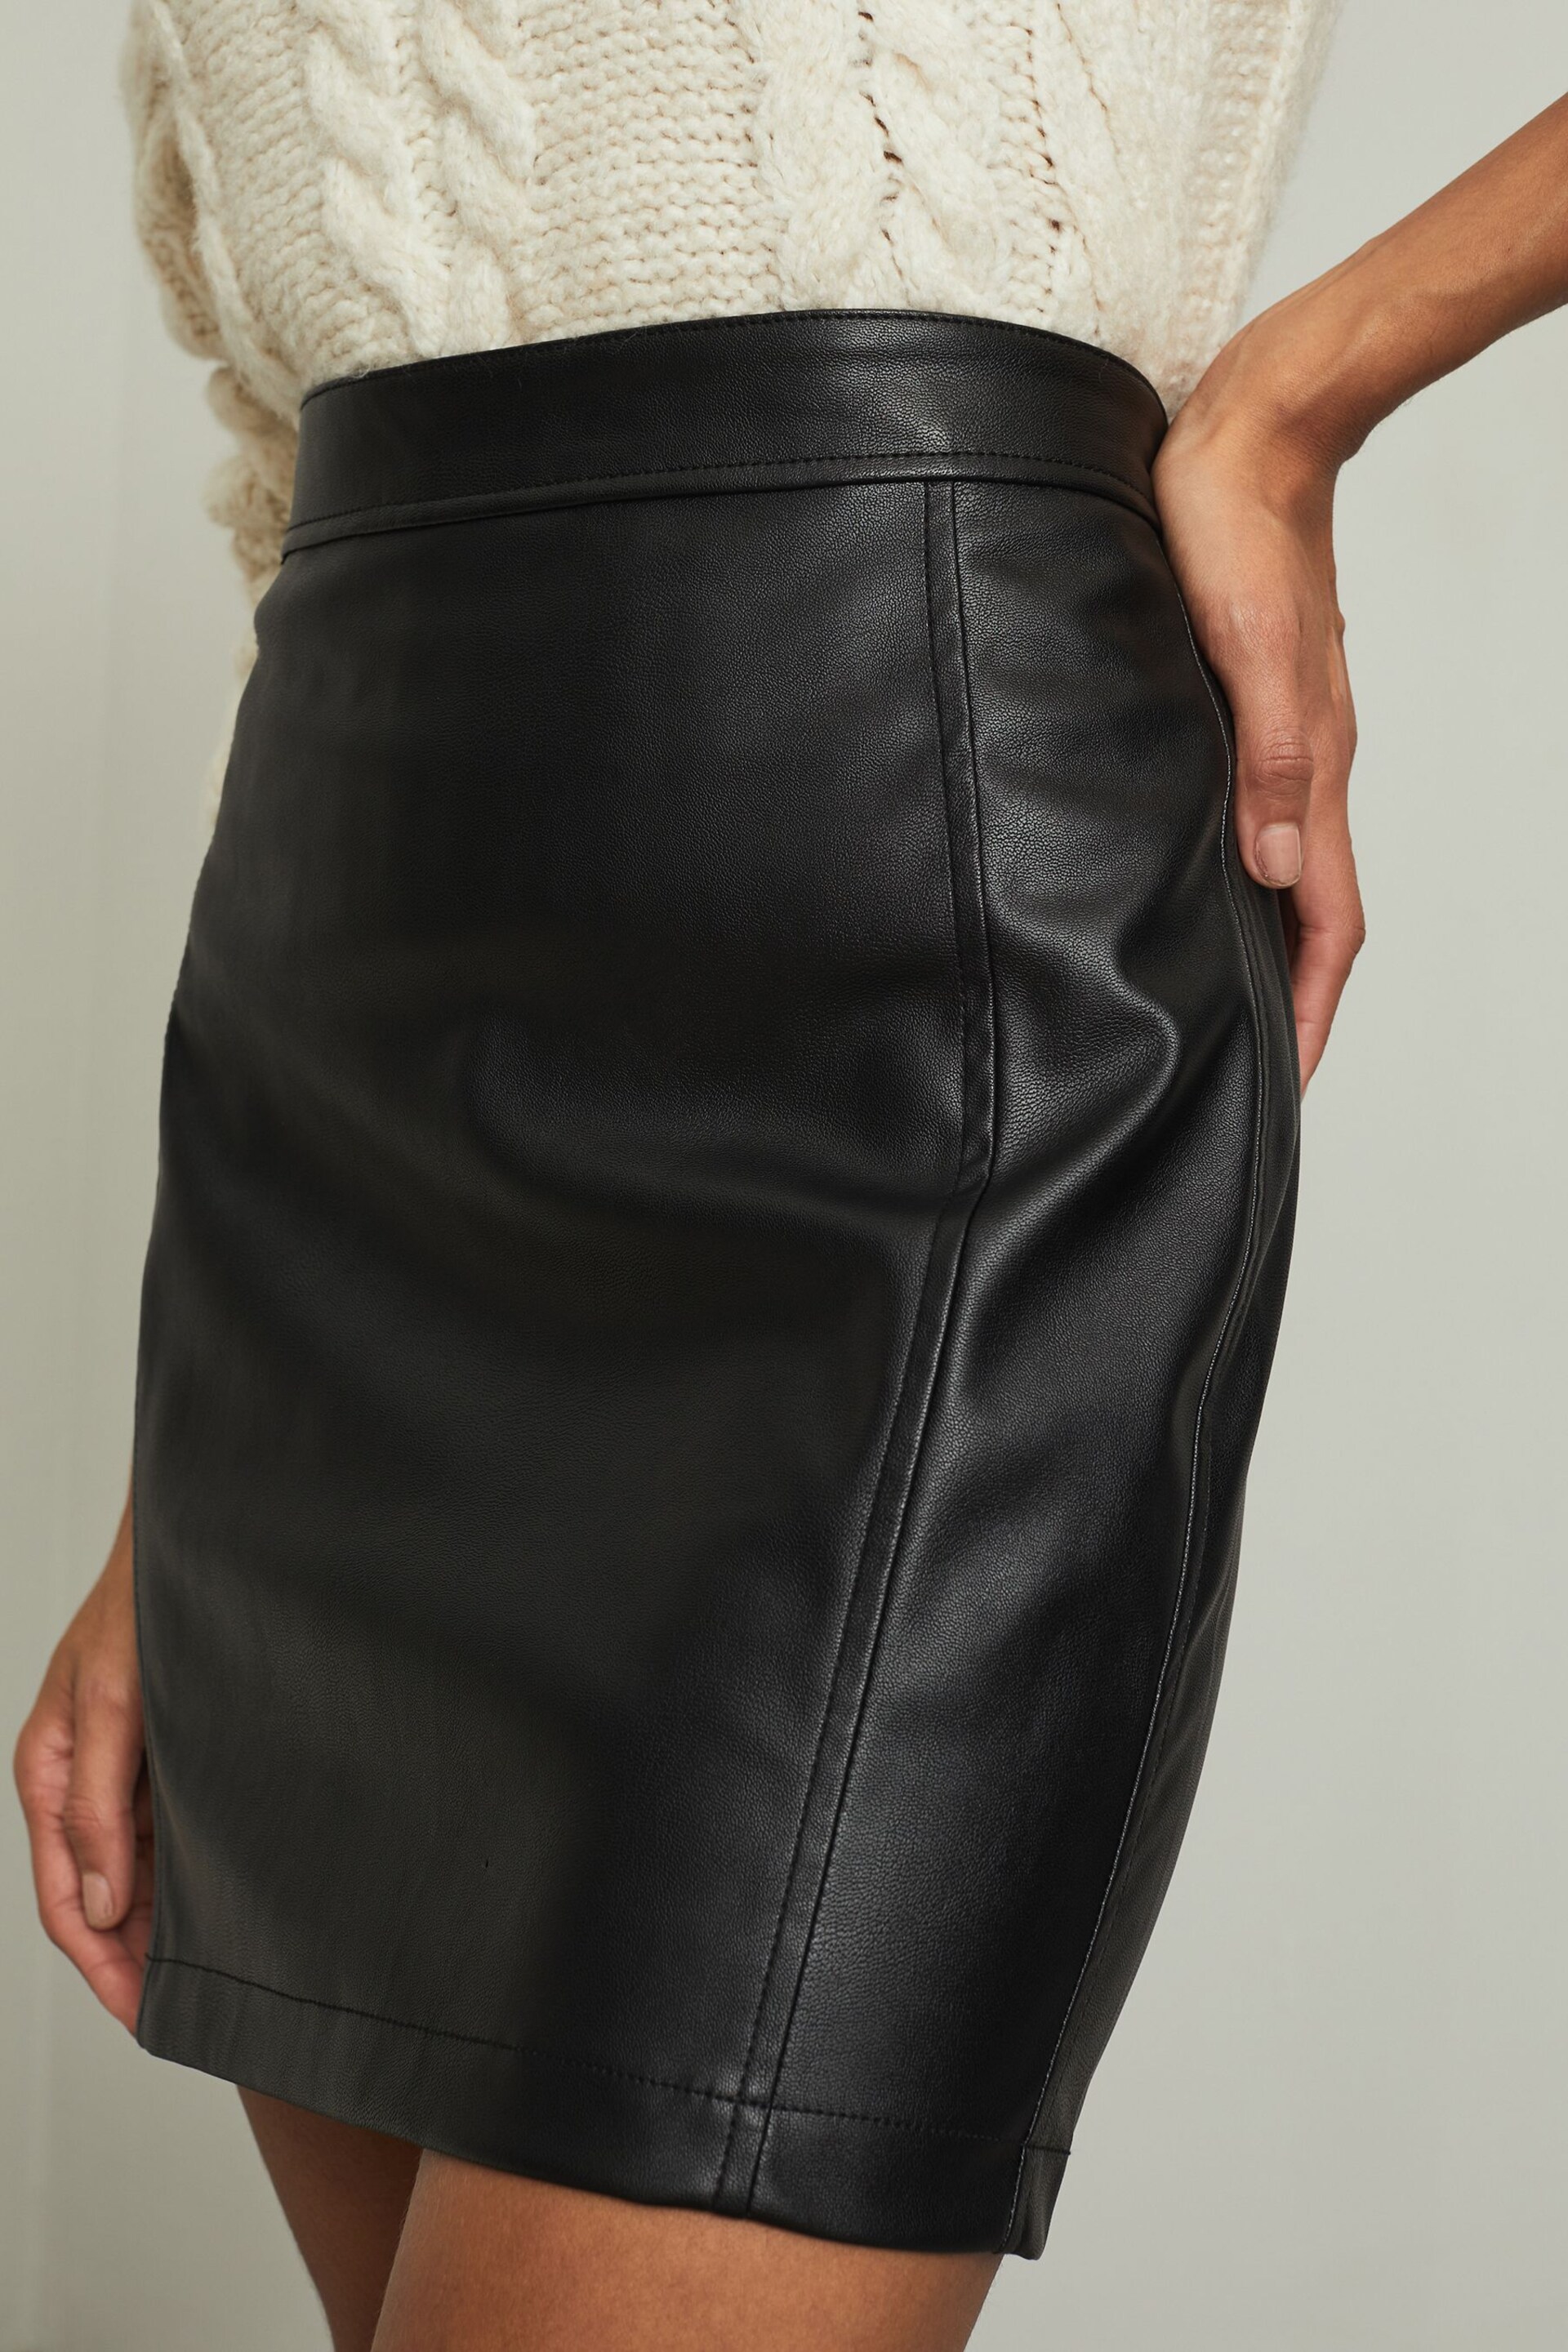 Lipsy Black Faux Leather Mini Skirt - Image 4 of 4